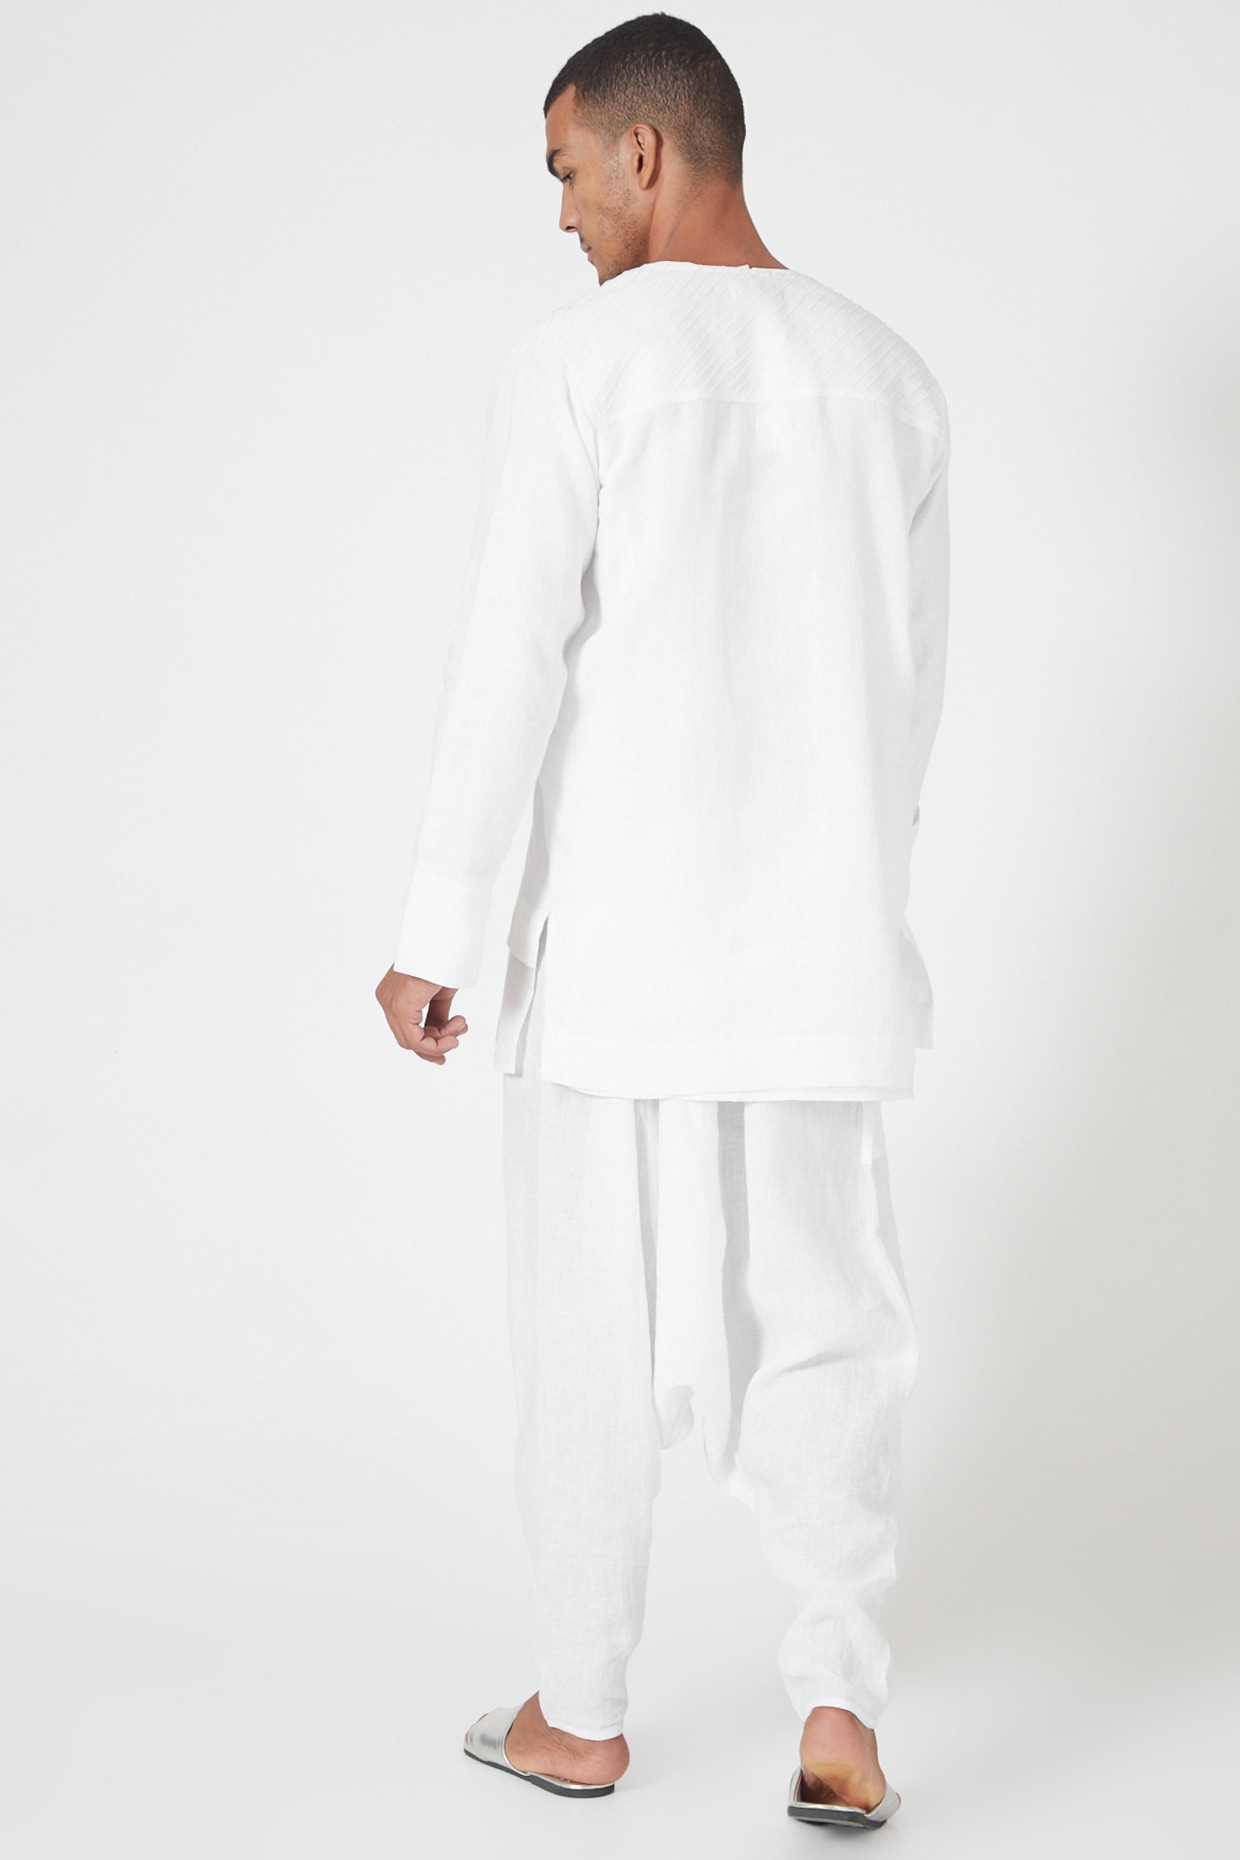 Embroidered Kaftan Top & Dhoti Pant Set | Dhoti pants, Aza fashion, Fashion